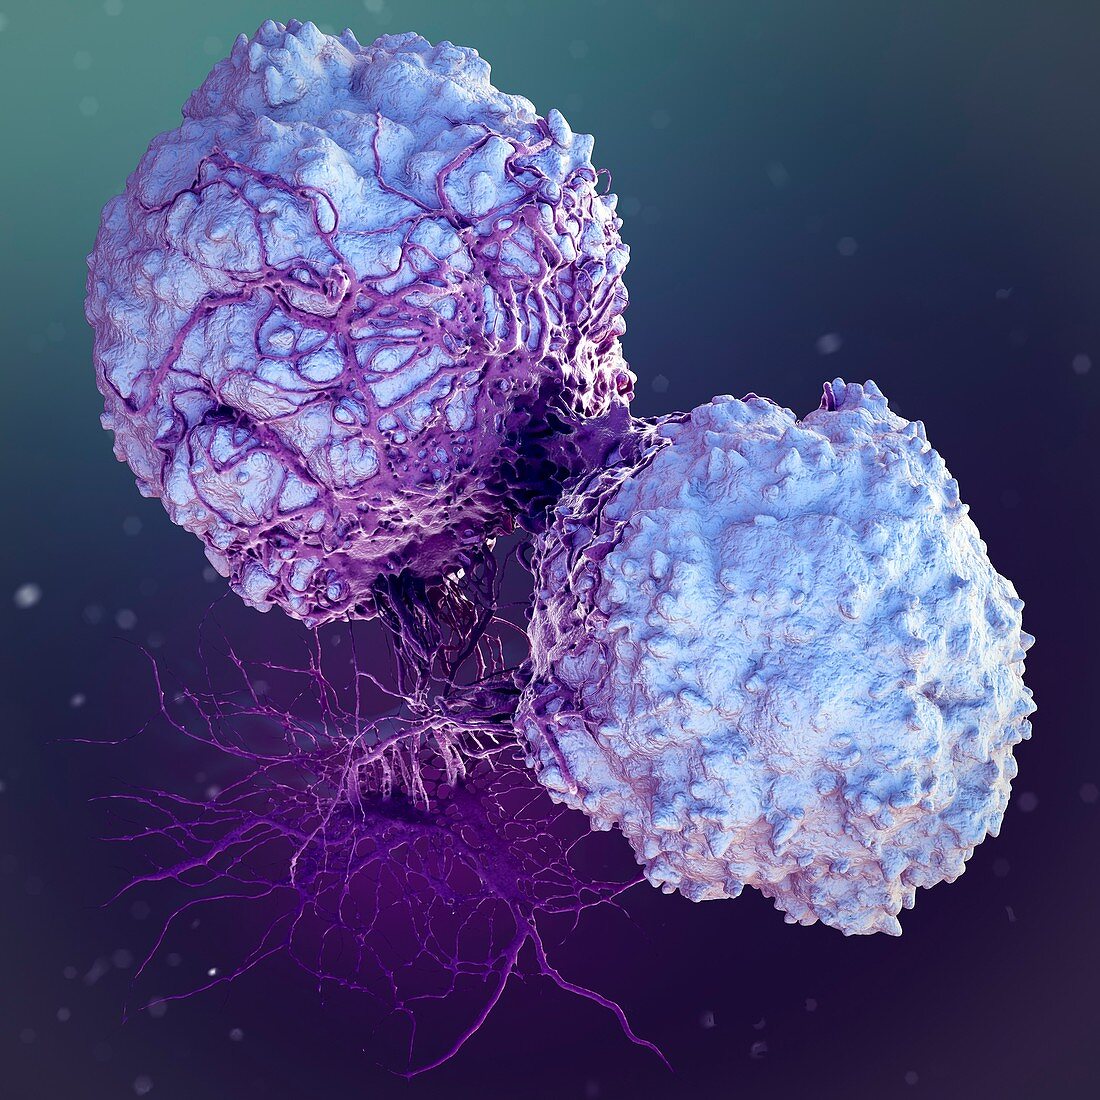 T-lymphocytes,illustration